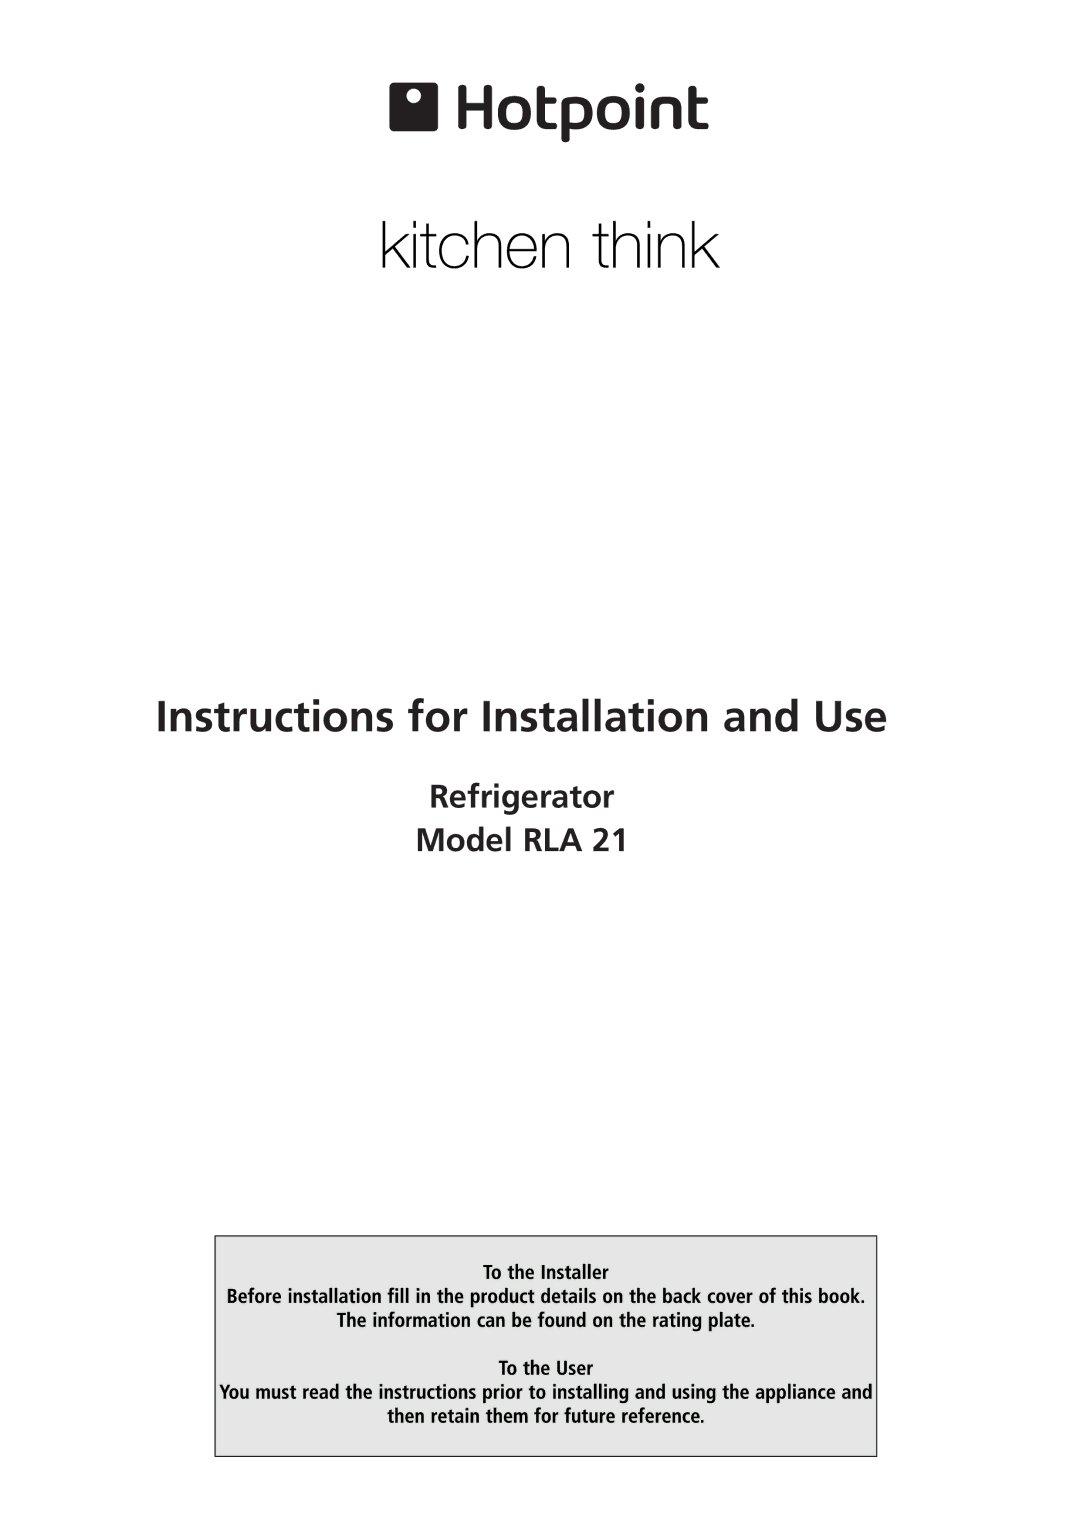 Hotpoint RLA 21 manual Instructions for Installation and Use, Refrigerator Model RLA 